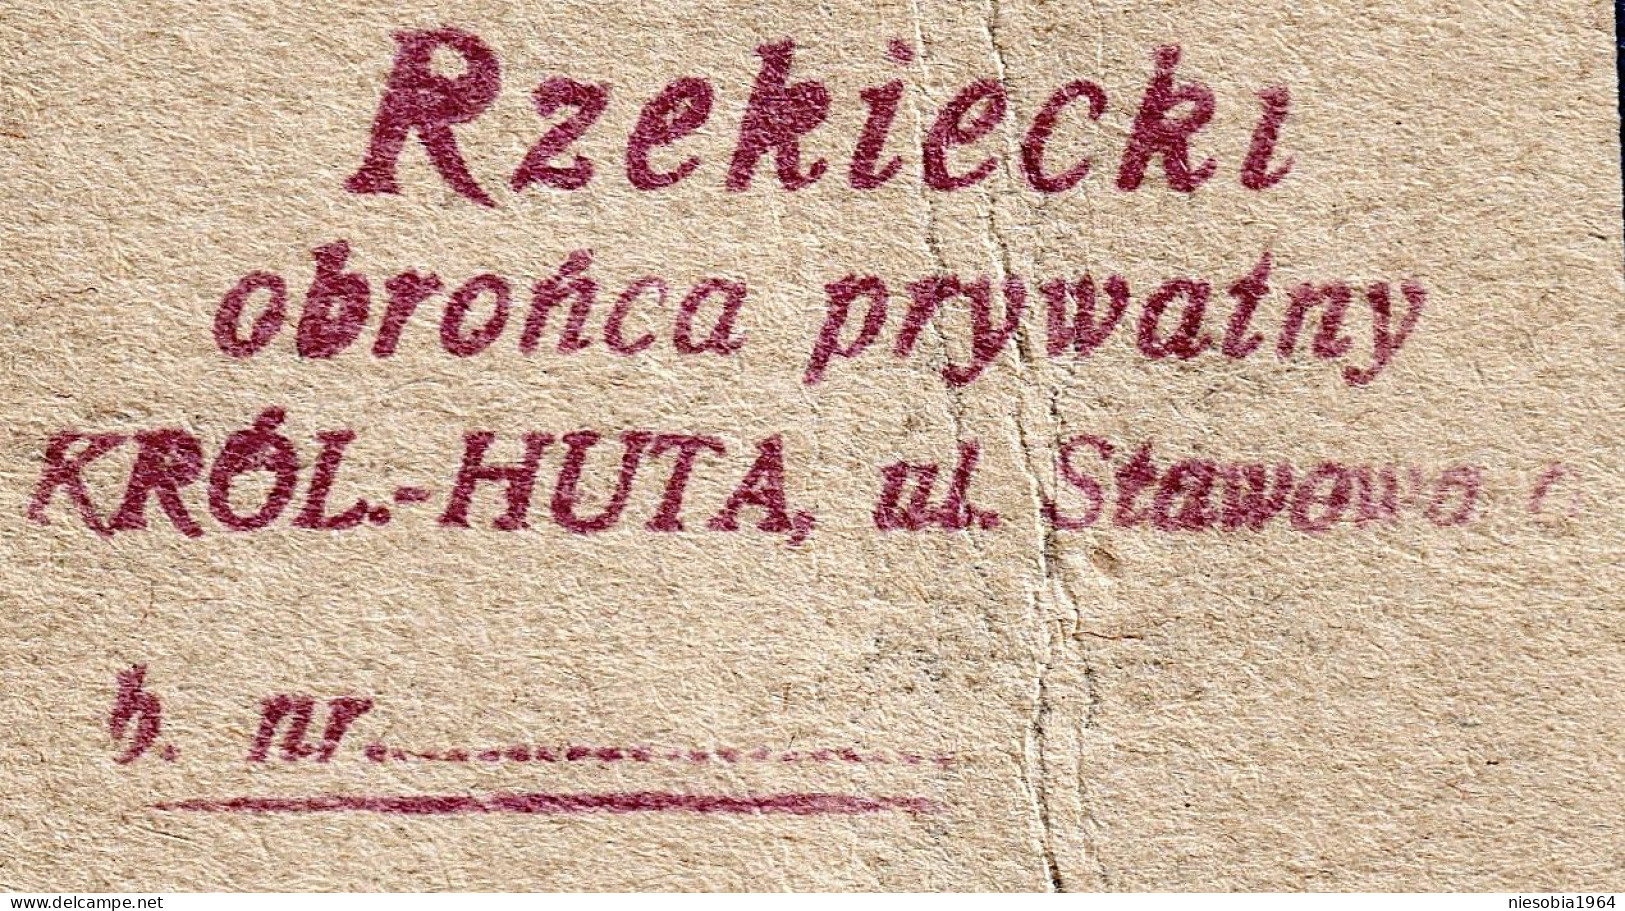 Republic Of Poland 15 Gr. Official Postcard Rzekiecki Private Defender   Królewska Huta 21/01/1930 - Briefe U. Dokumente